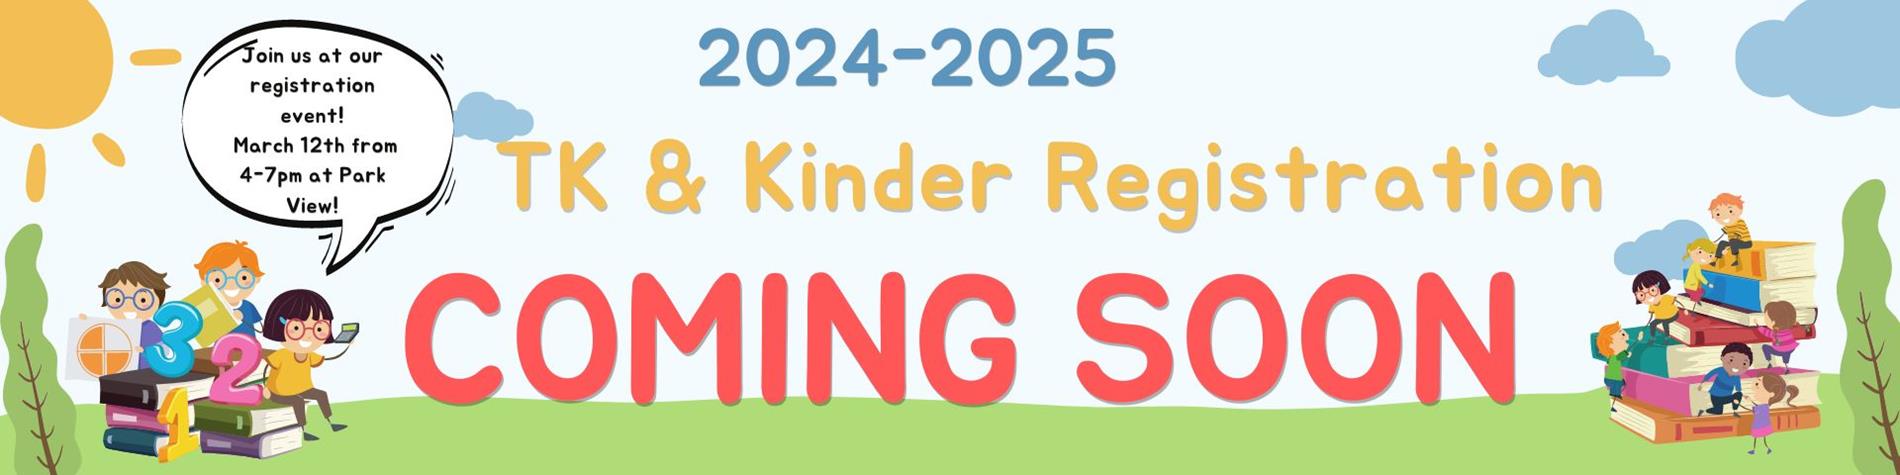 2024-2025 Registration